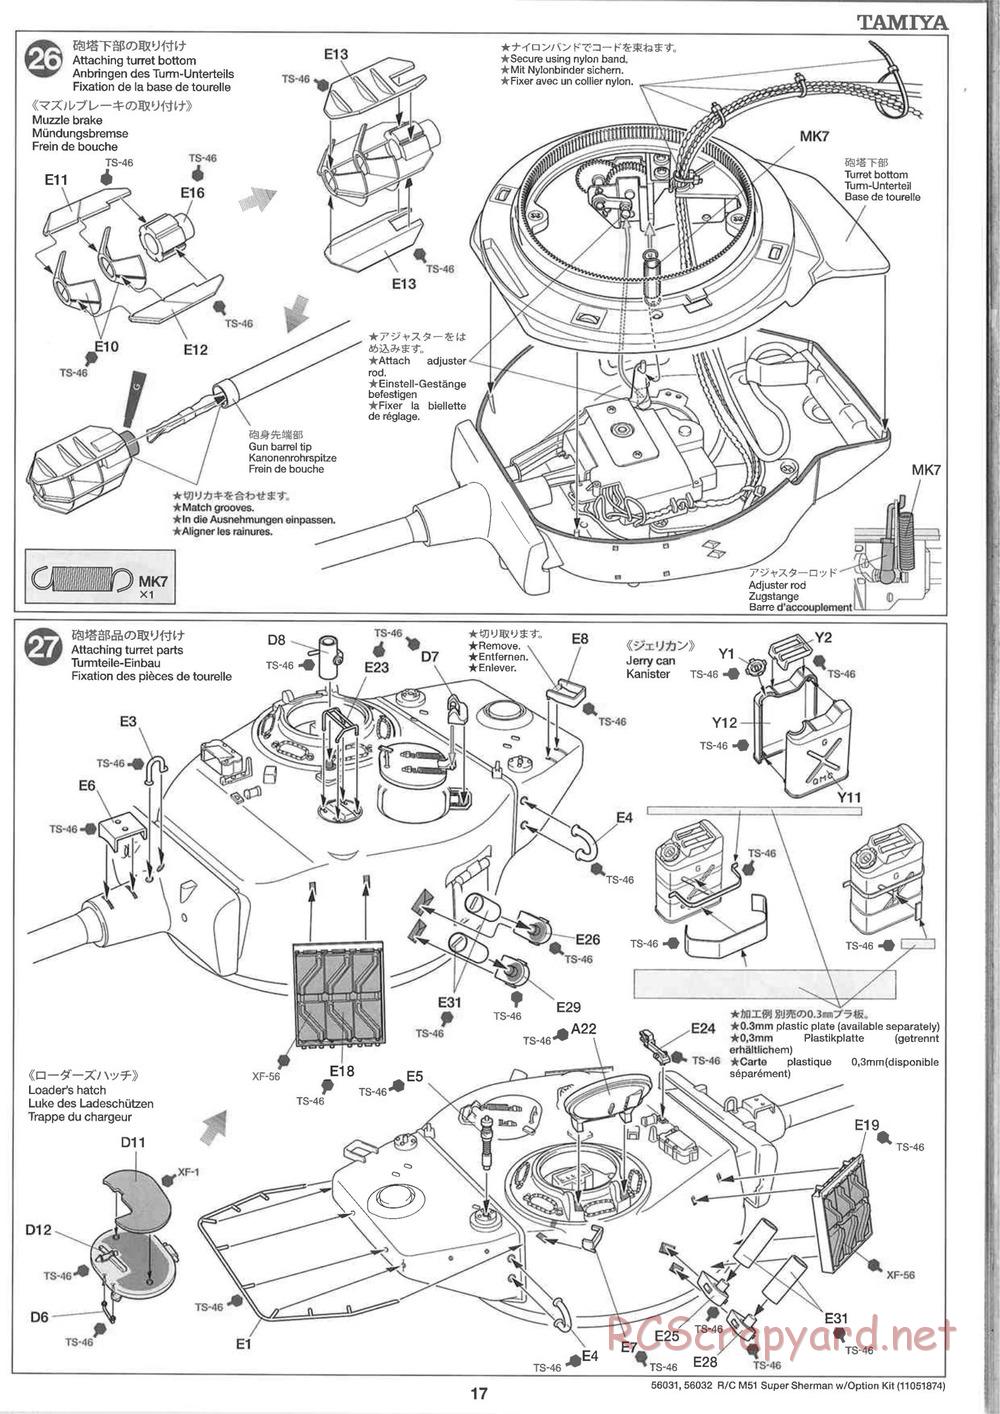 Tamiya - Super Sherman M-51 - 1/16 Scale Chassis - Manual - Page 17